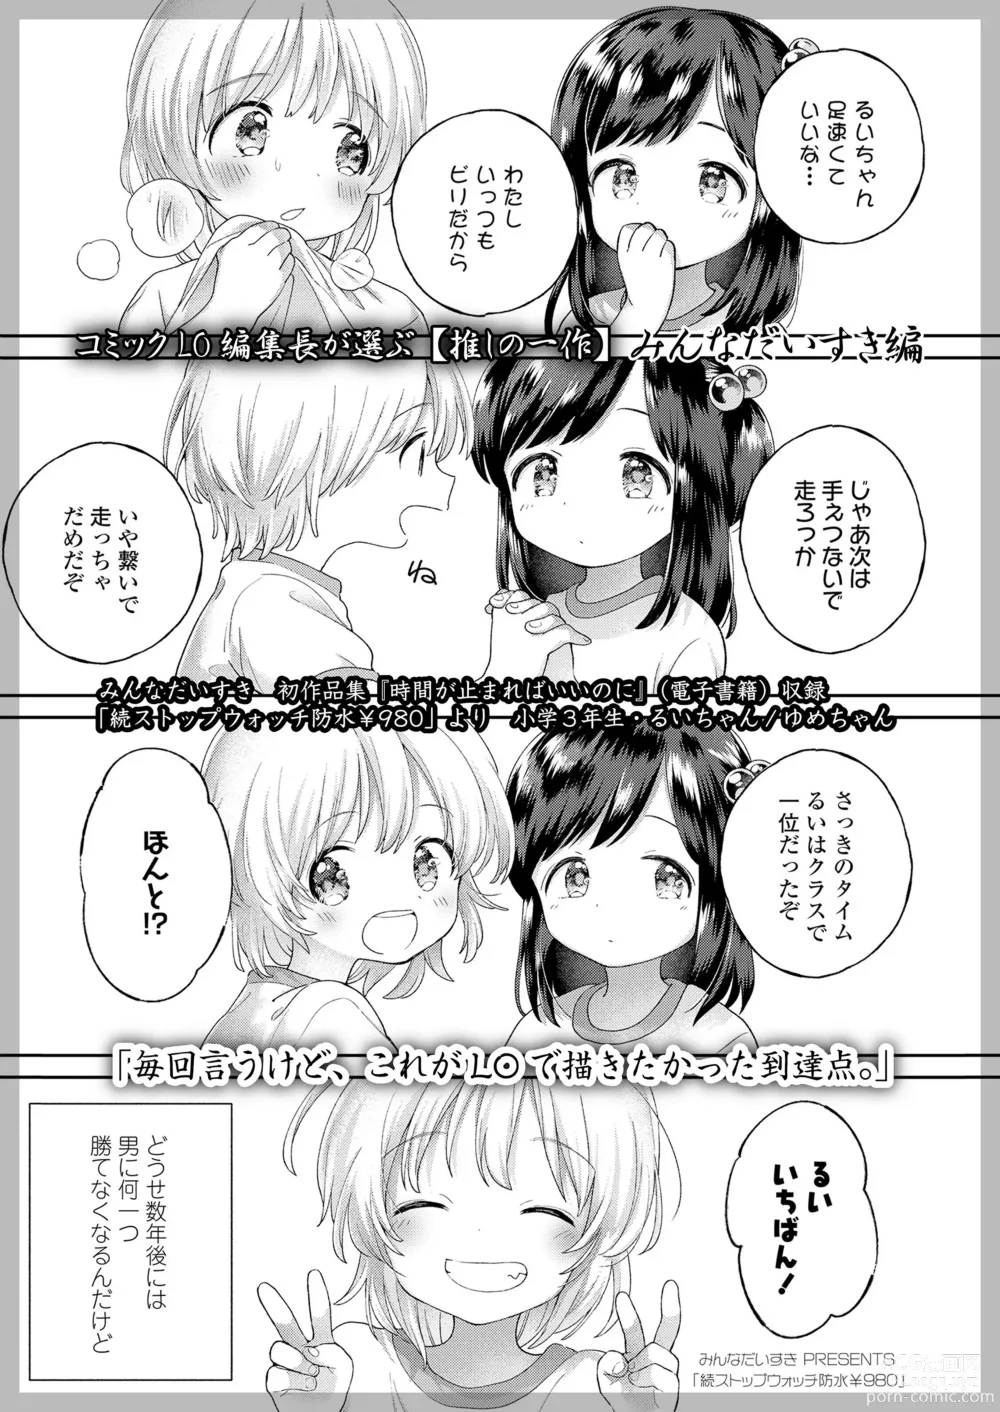 Page 117 of manga COMIC LOE VOL.4 NEXT